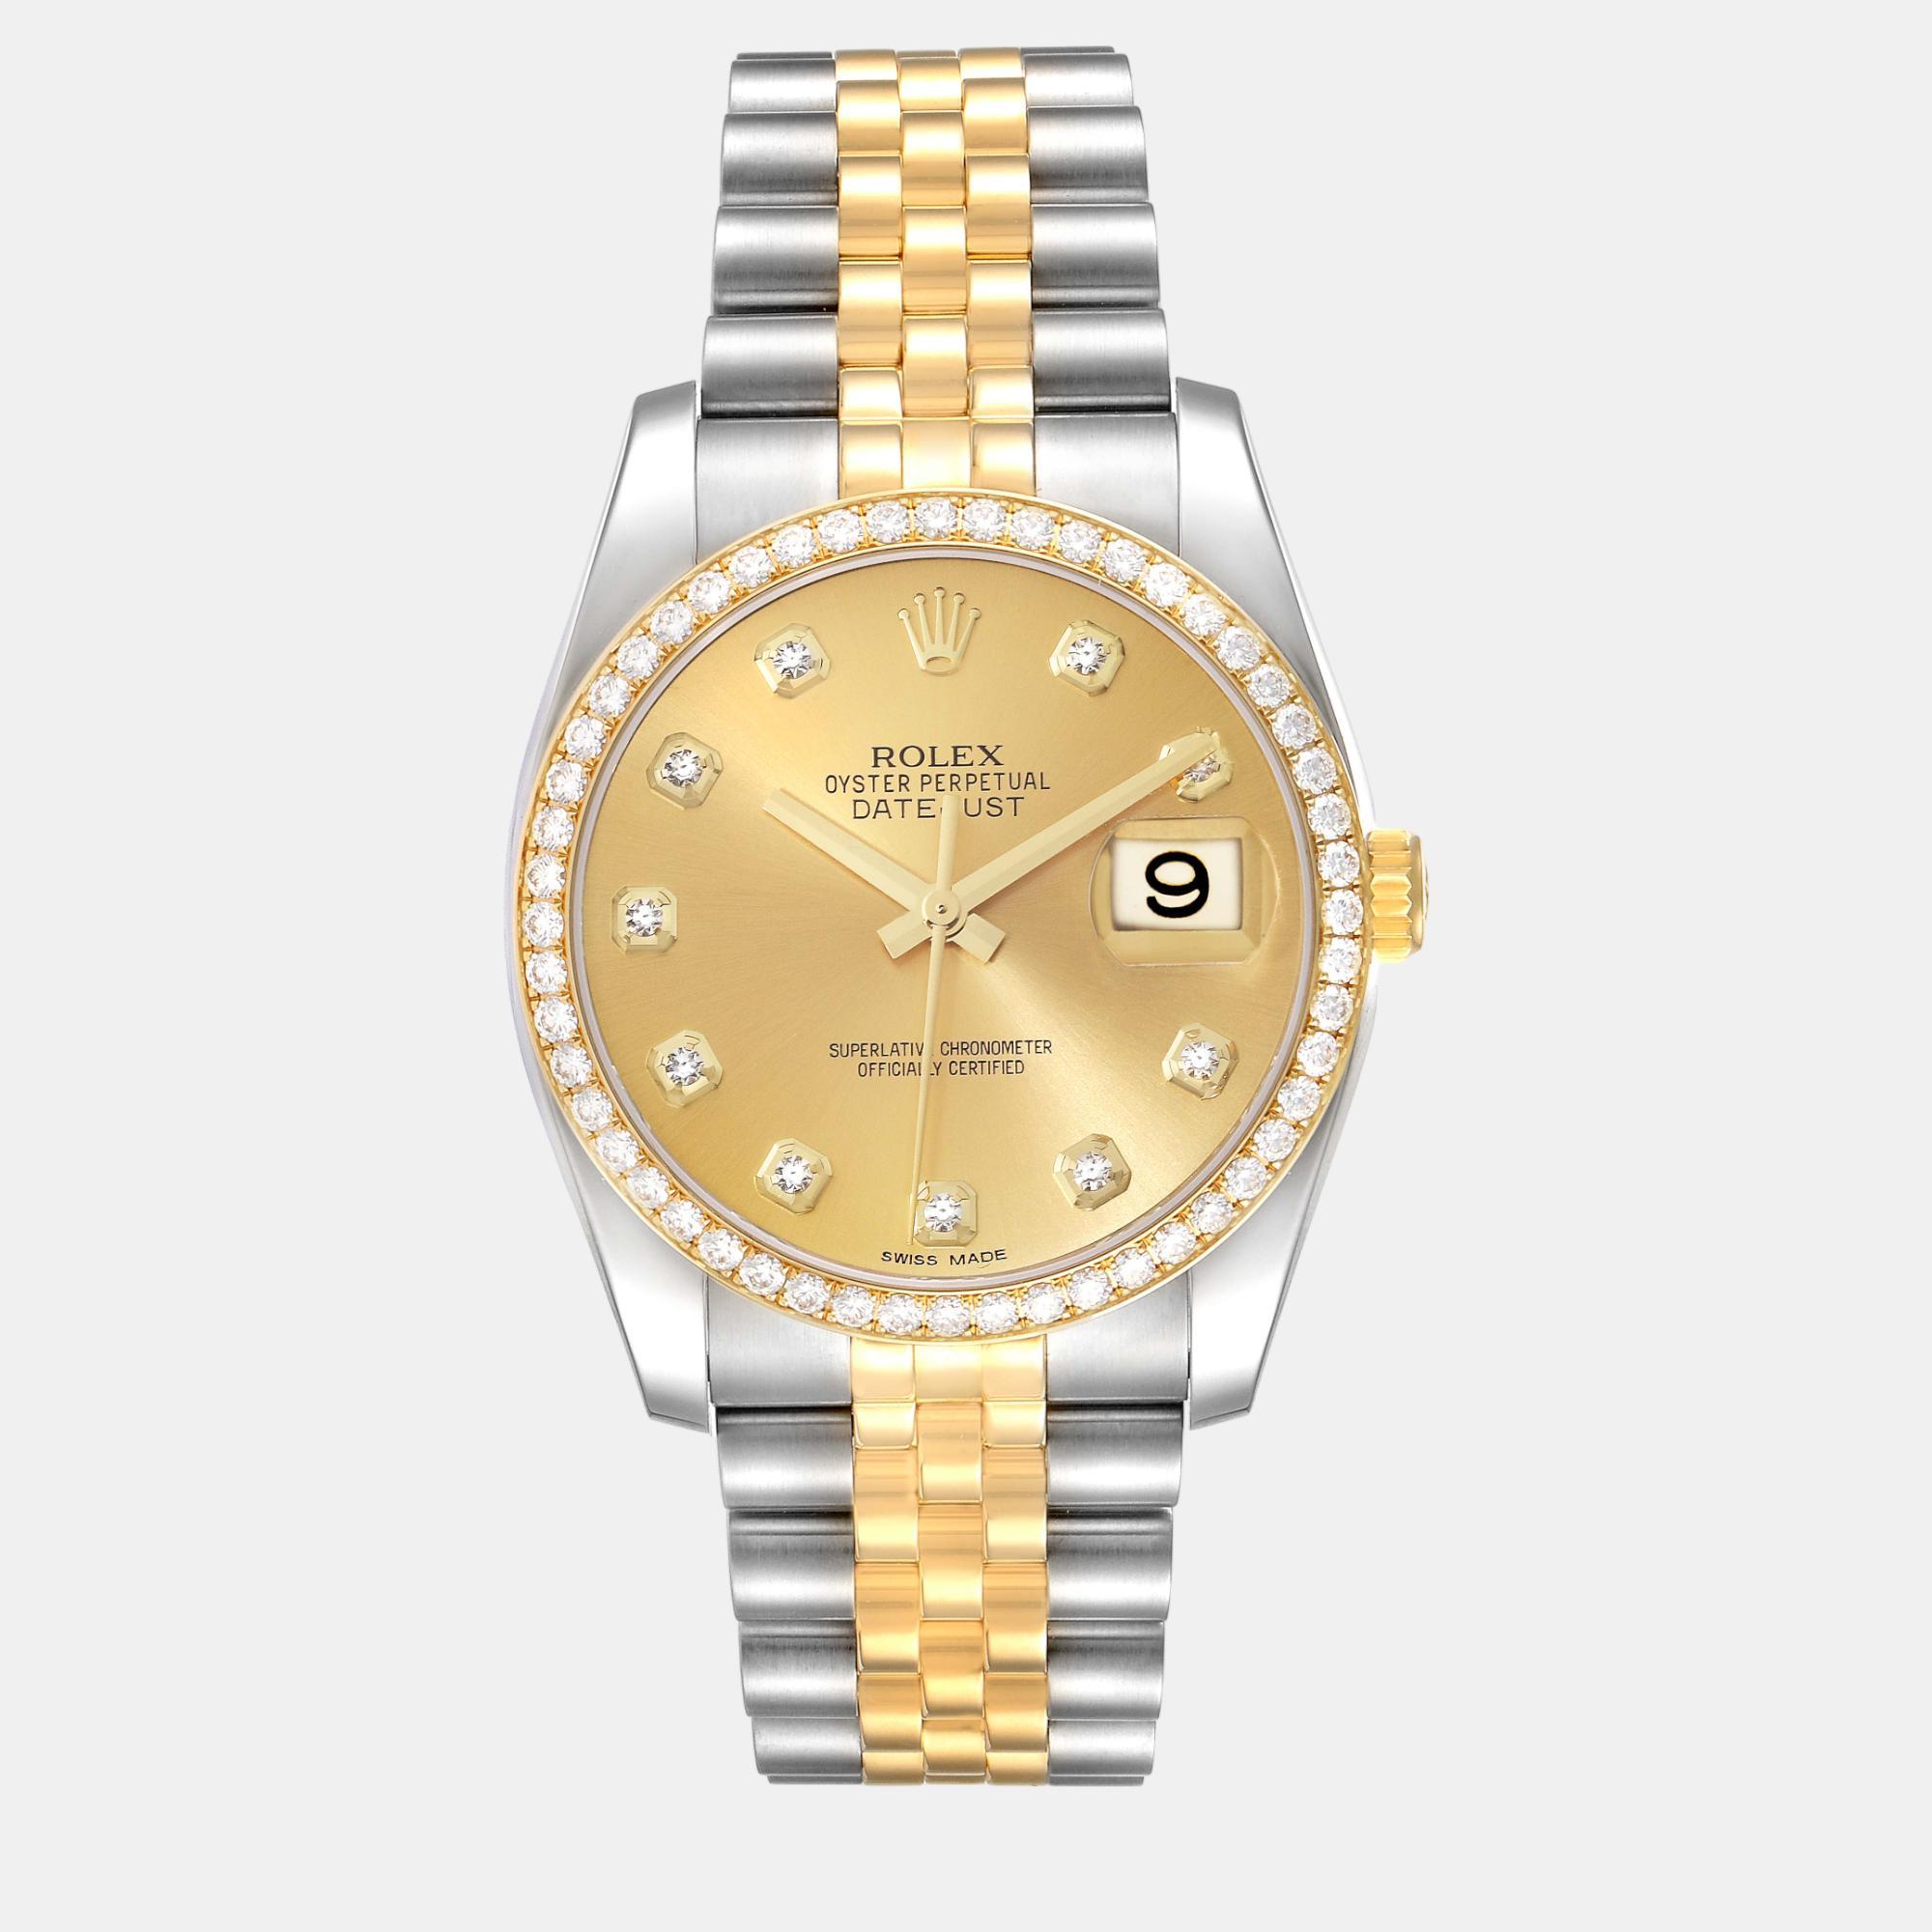 Rolex datejust champagne dial steel yellow gold diamond men's watch 116243 36 mm